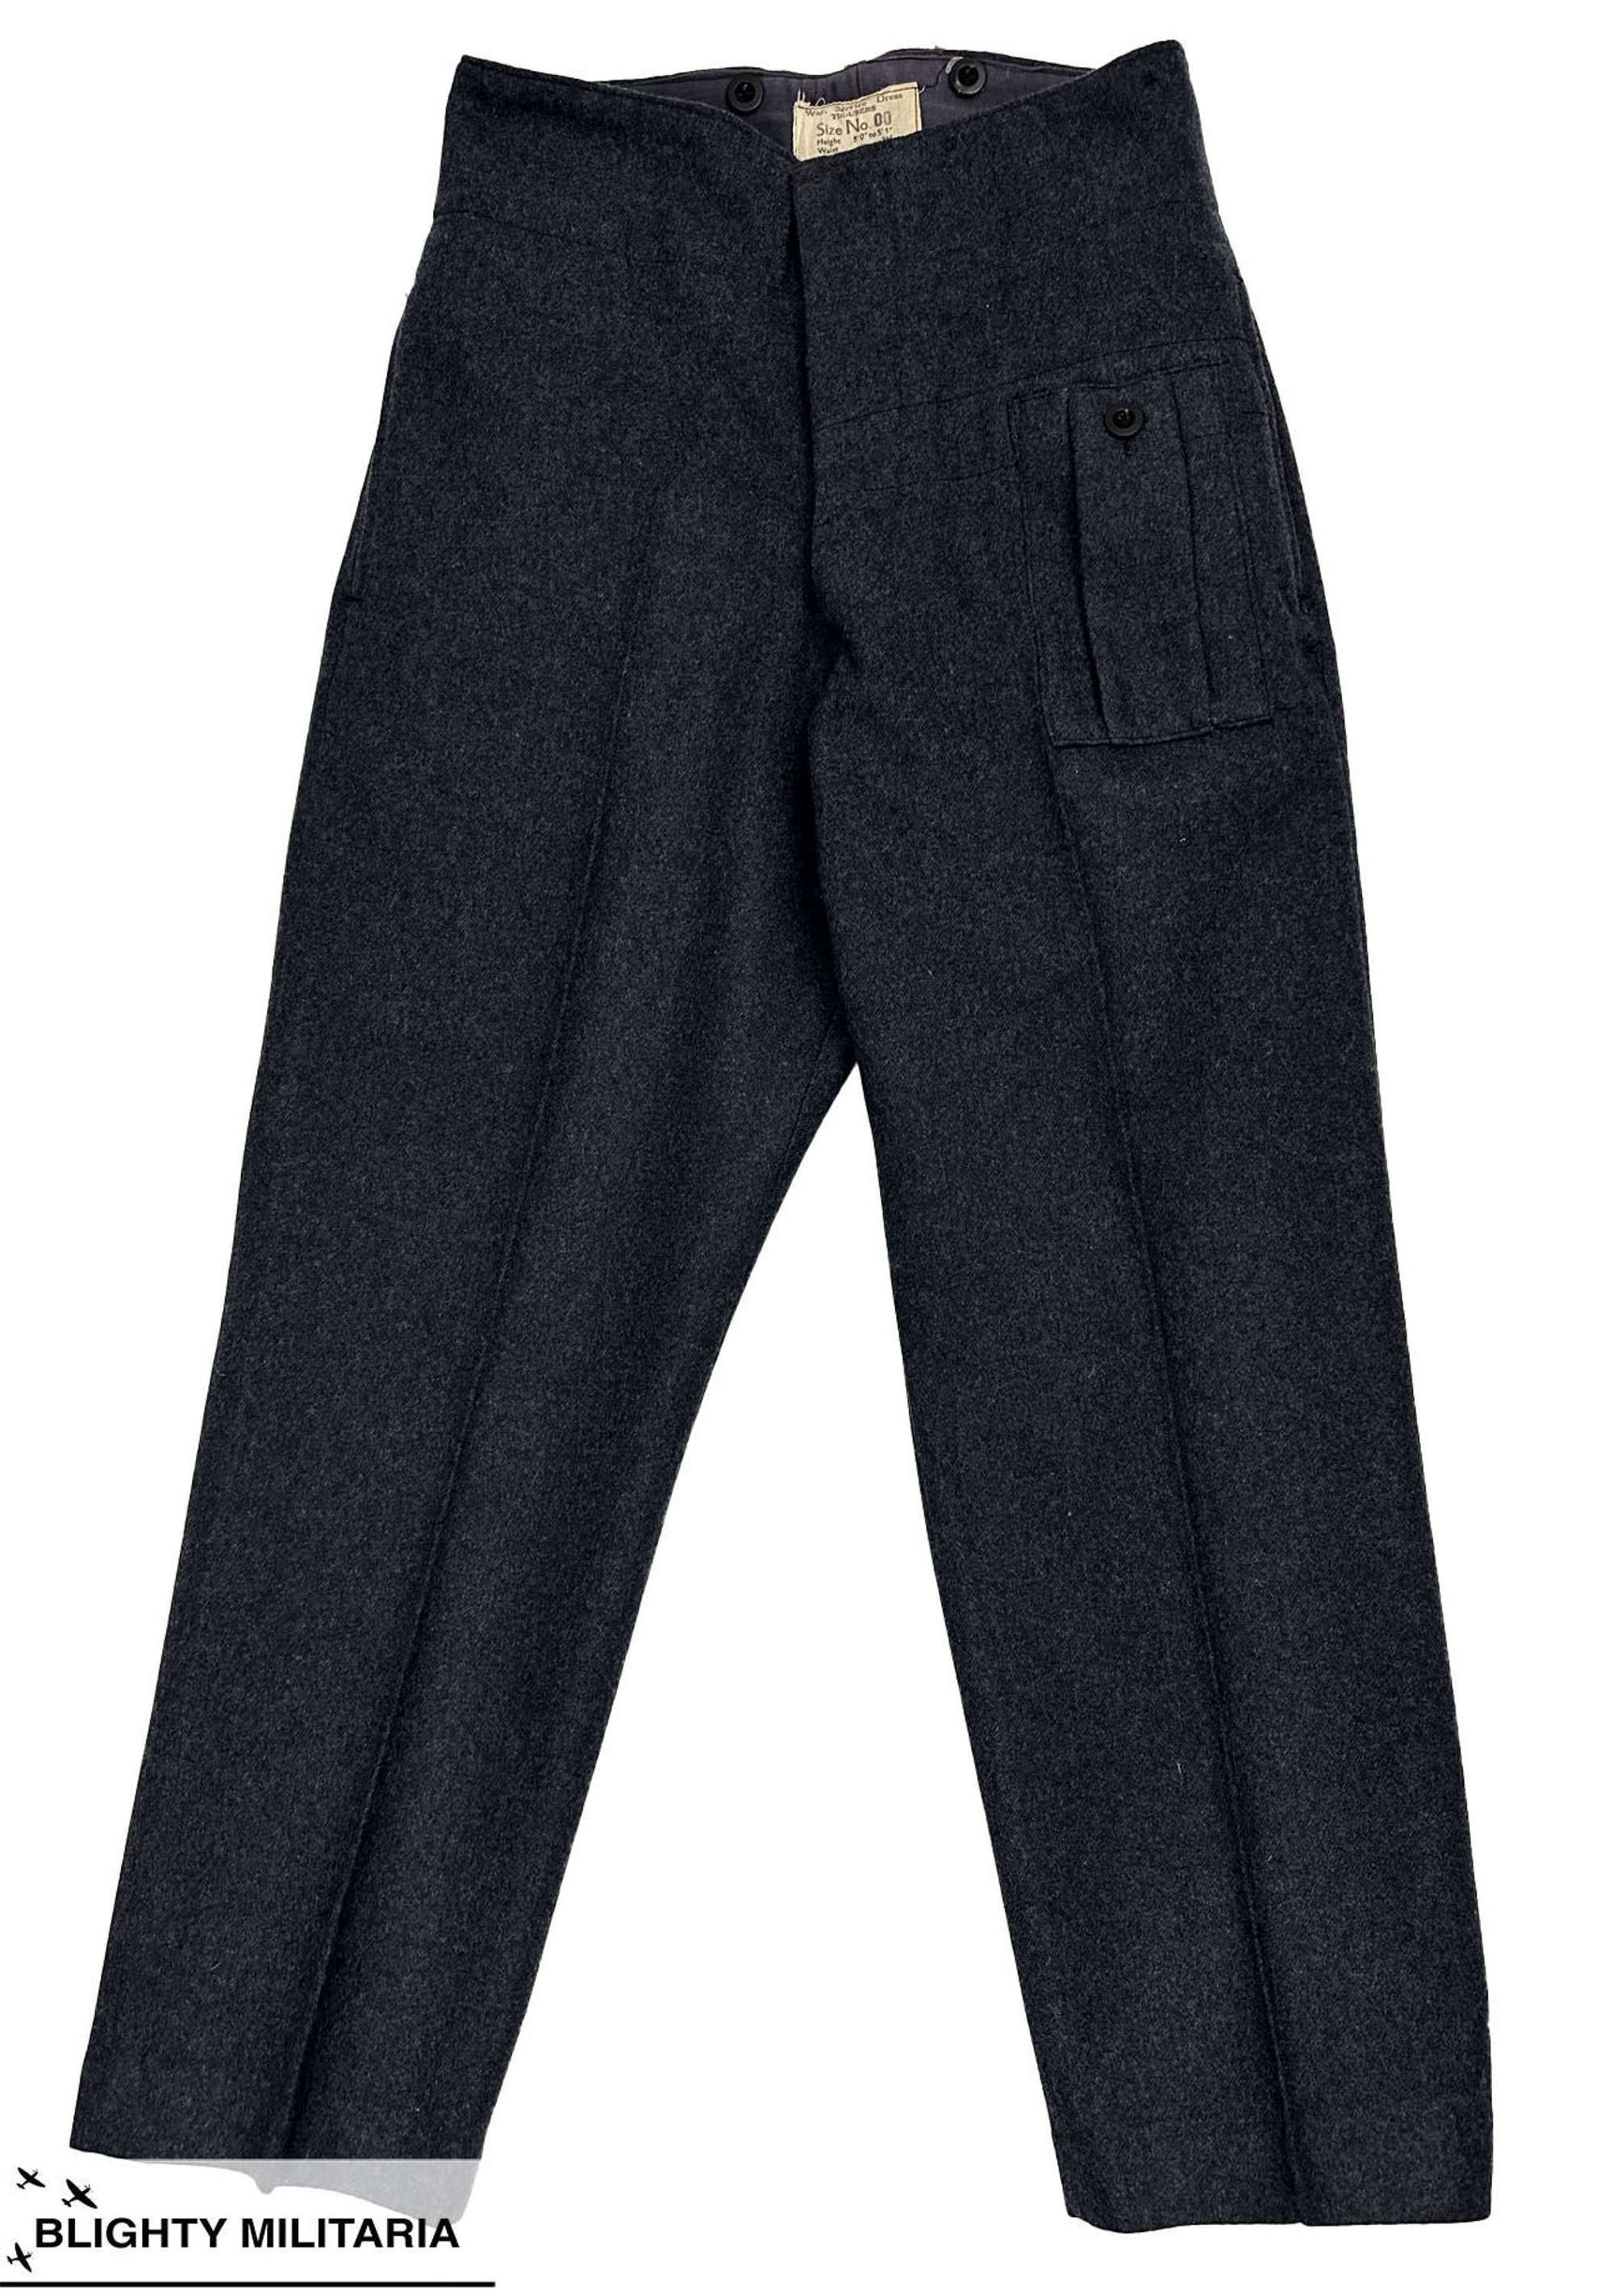 Original 1944 Dated RAF War Service Dress Trousers - Size 00